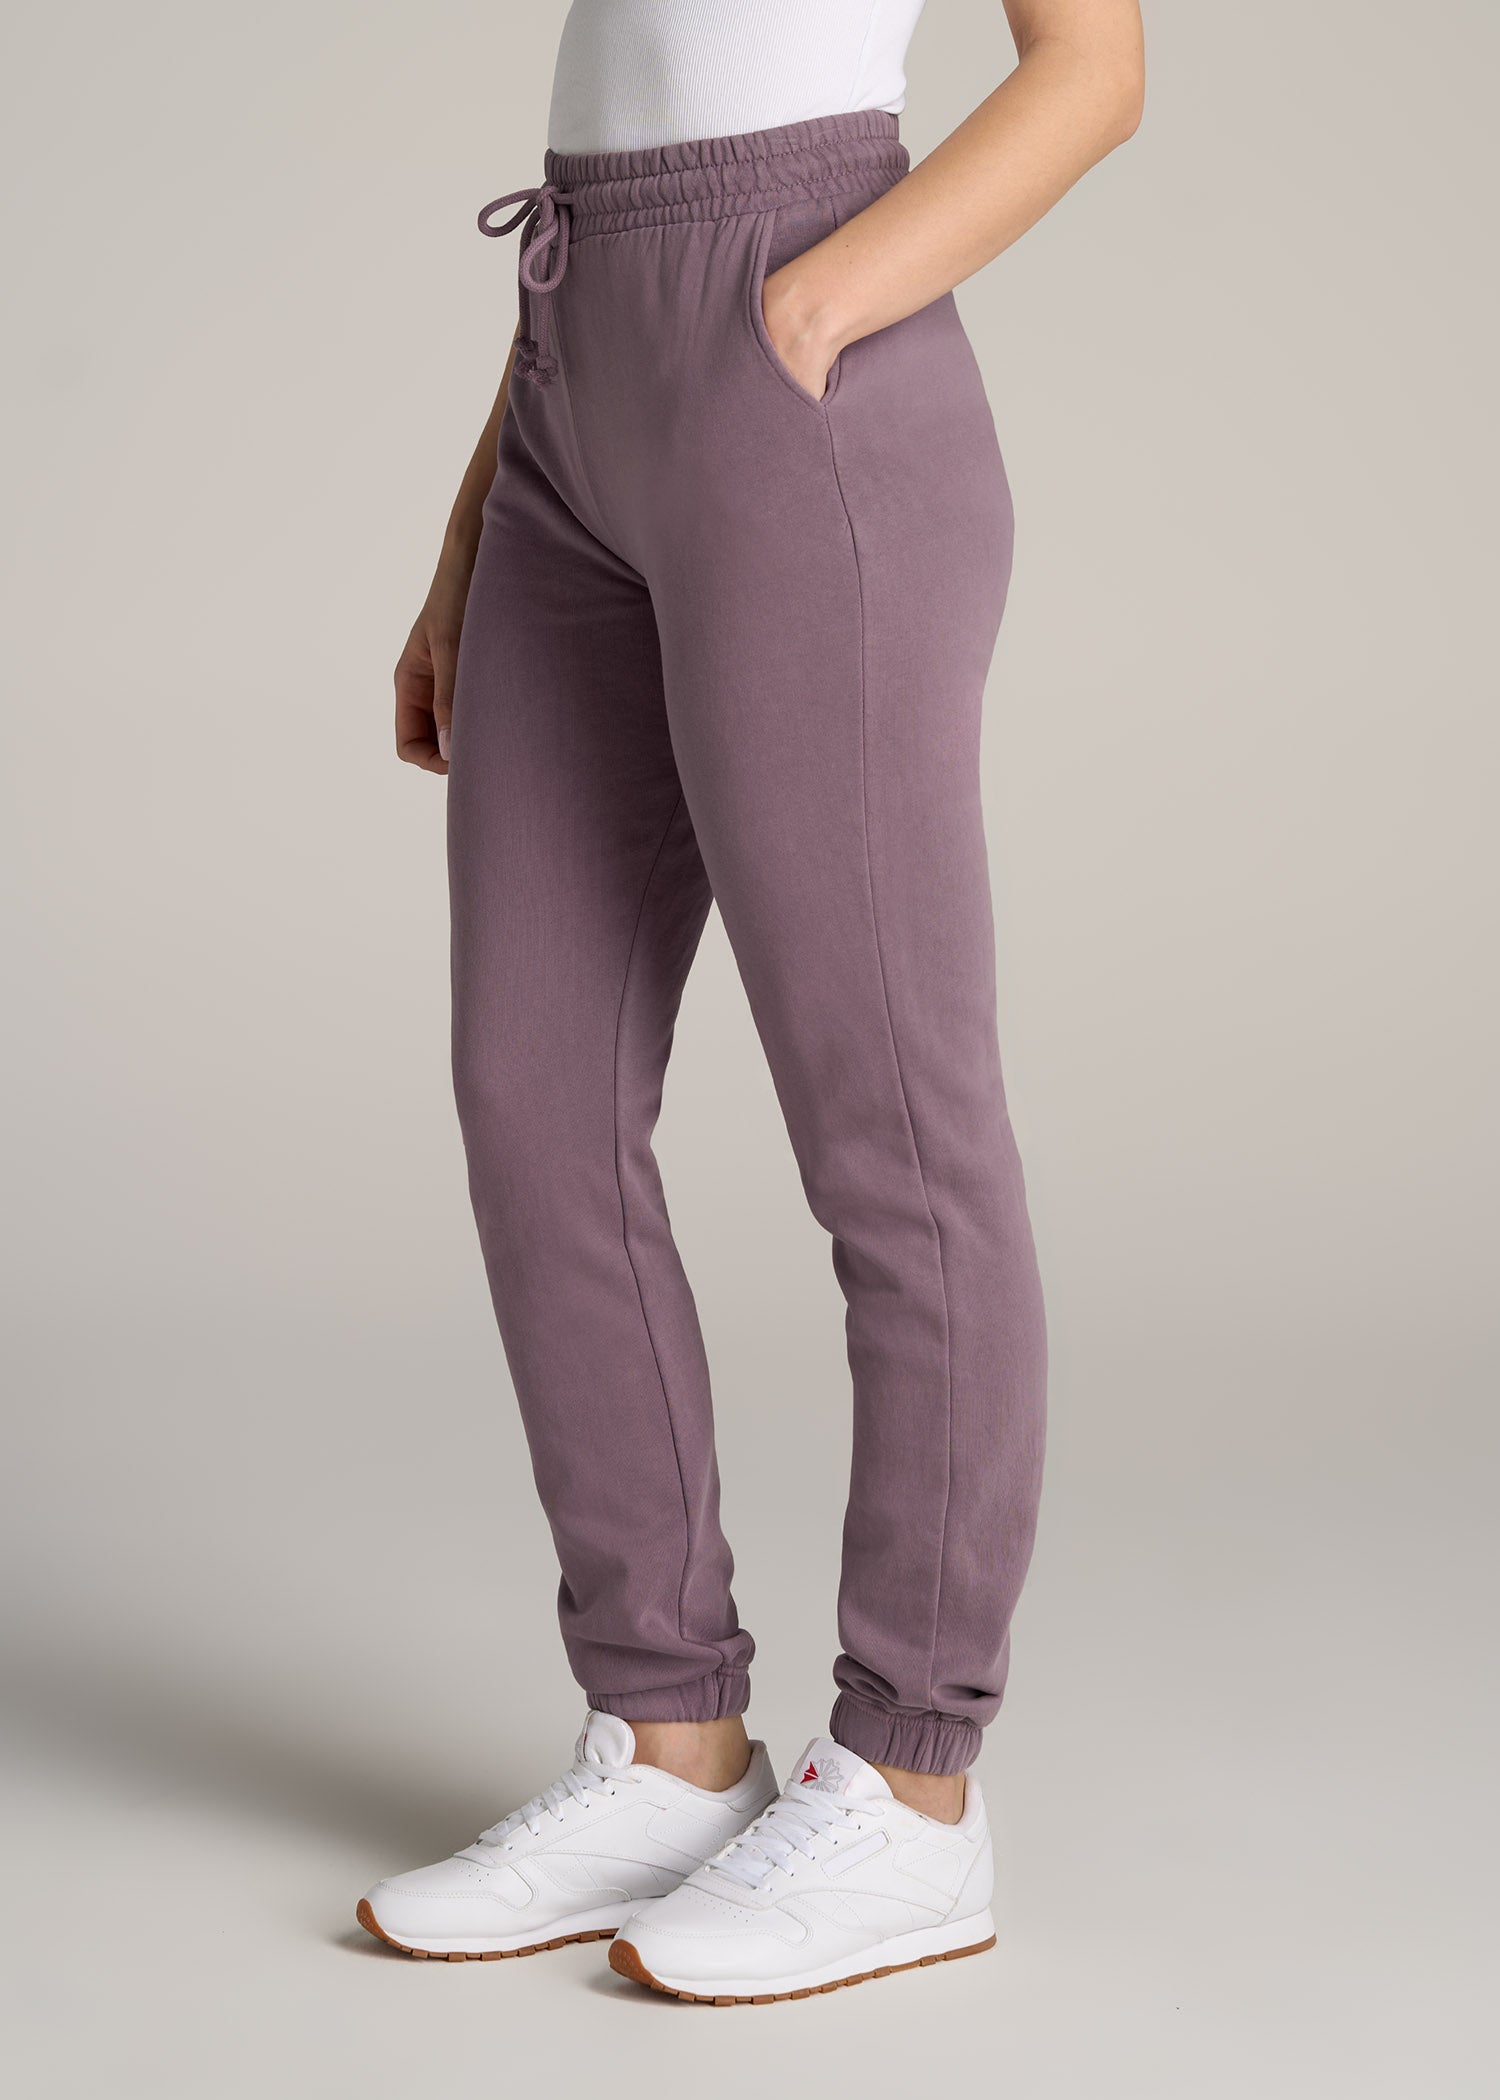 Women's Solid Color Seamless Thin Belt Thin Elastic Casual Bottom Bra Yoga  Underwear Crazy Sports Bras